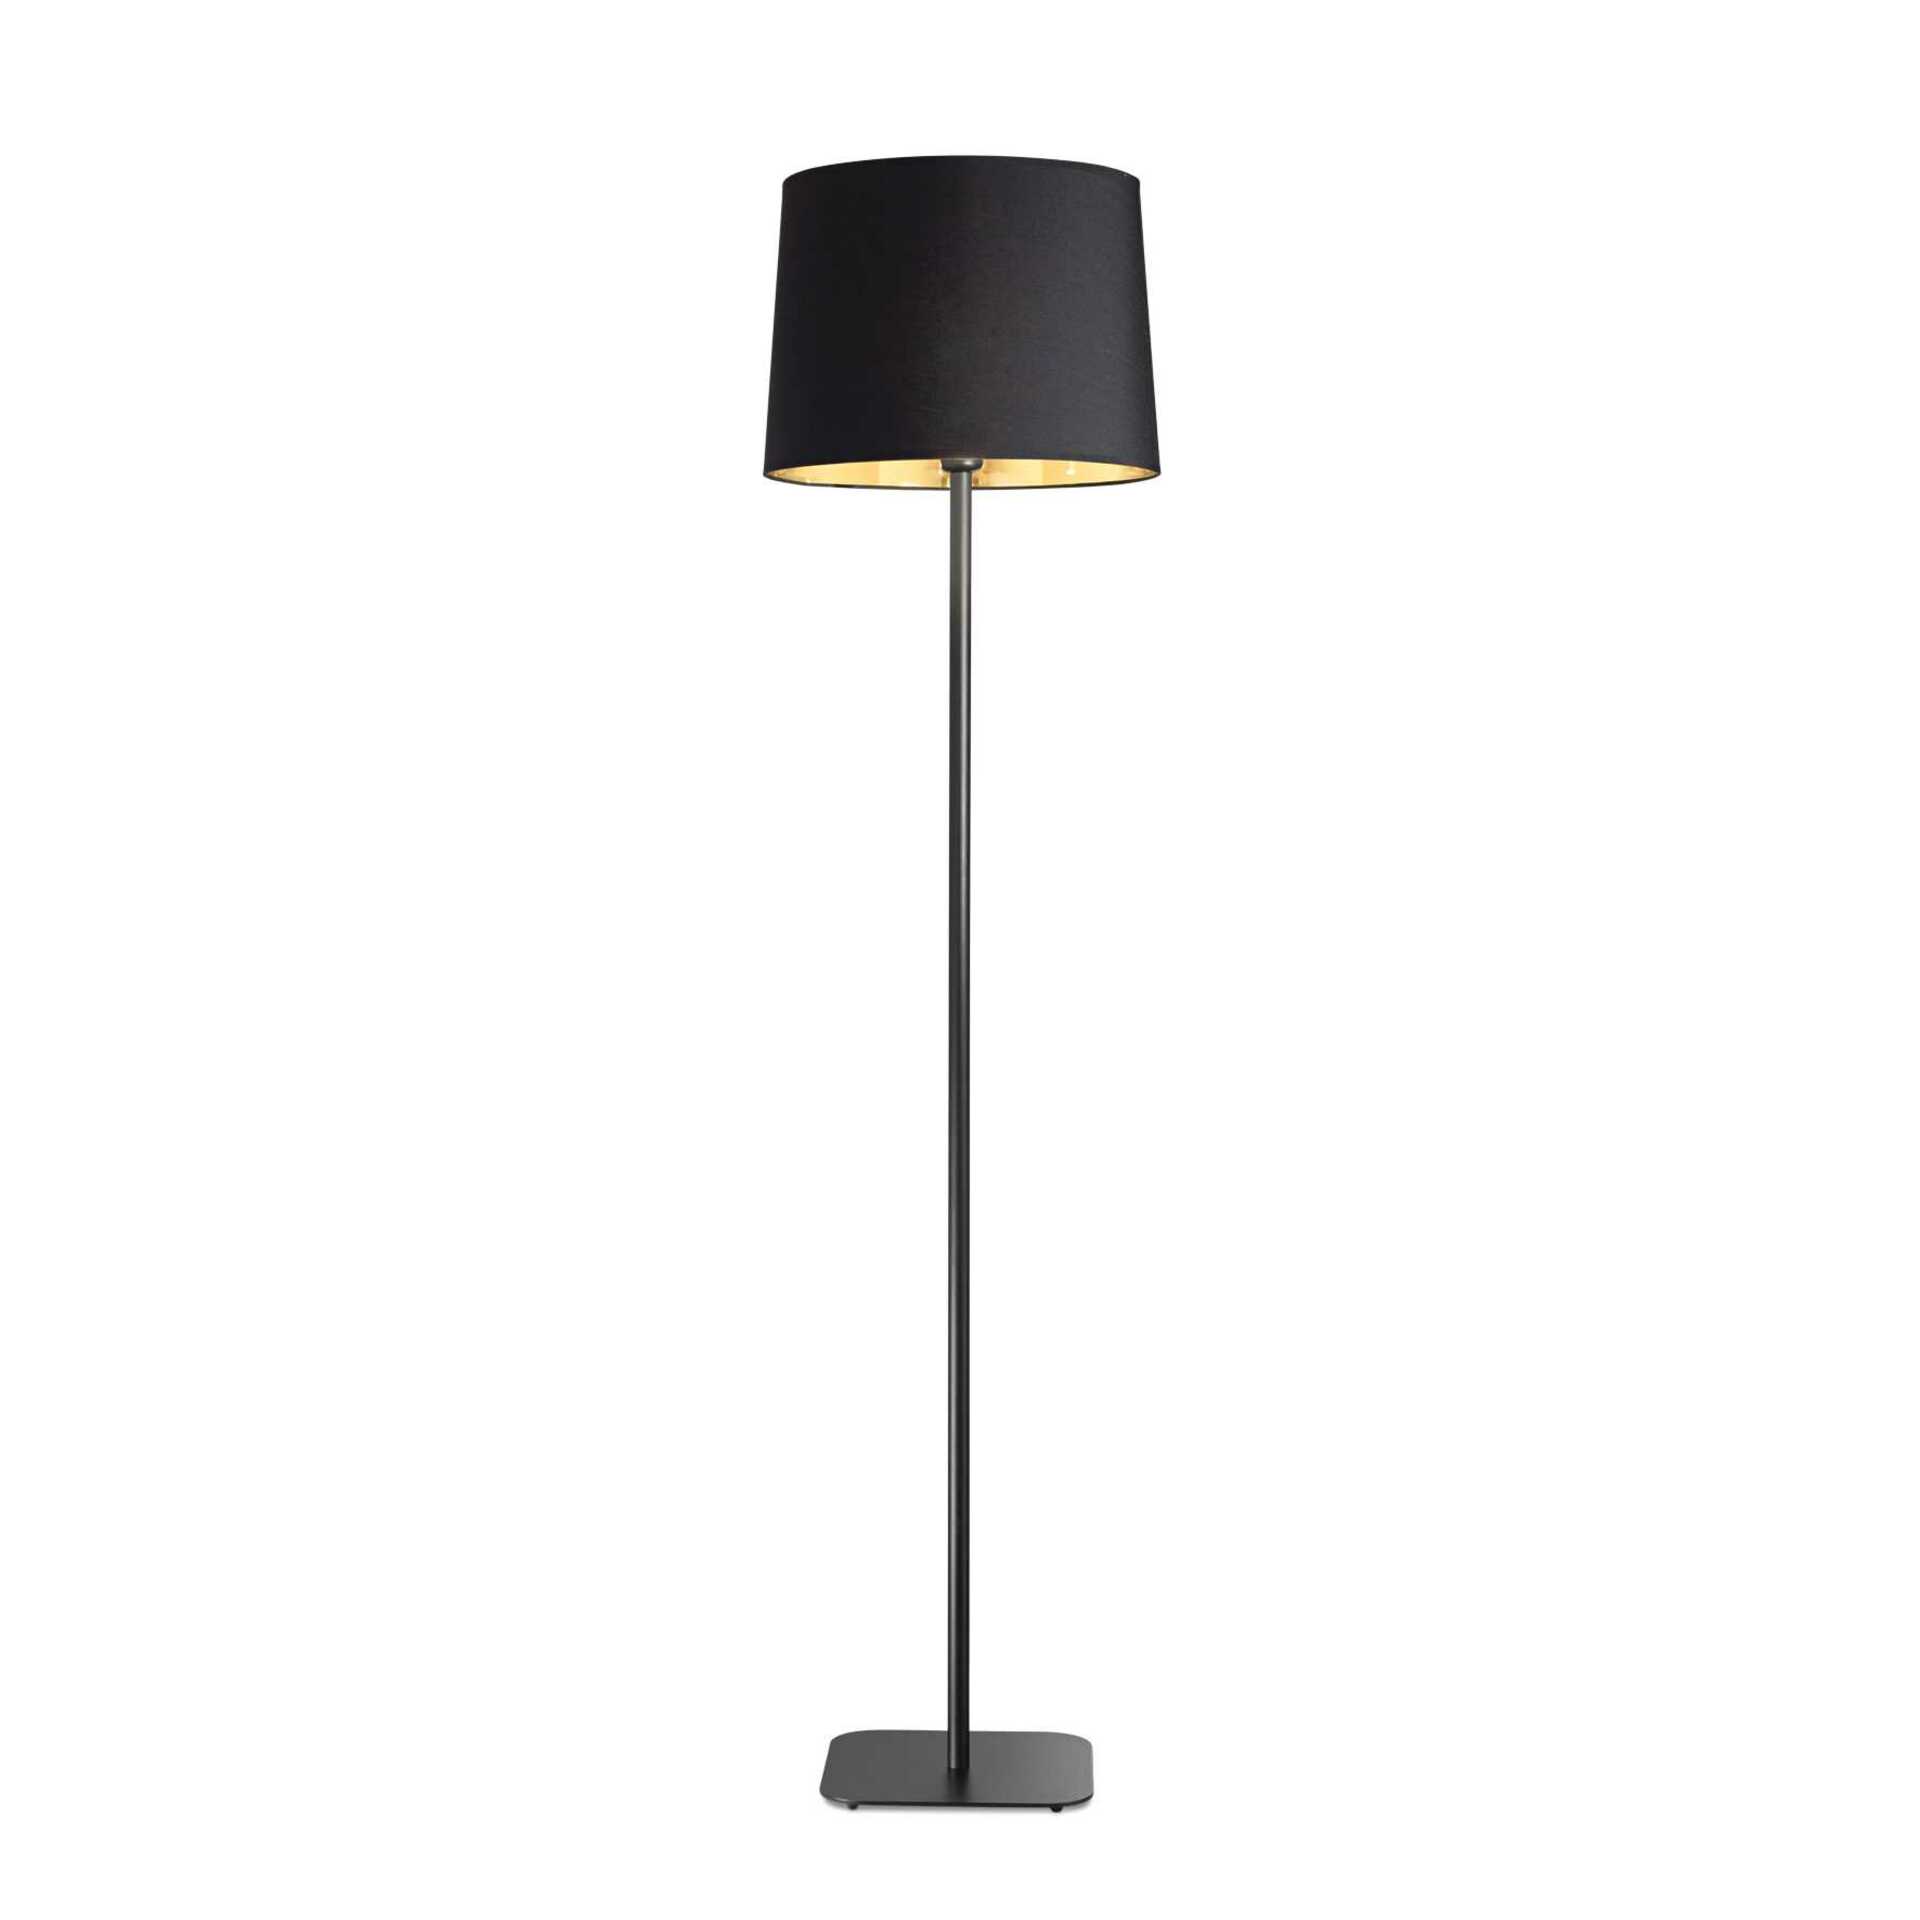 Stojací lampa Ideal Lux Nordik PT1 161716 E27 1x60W